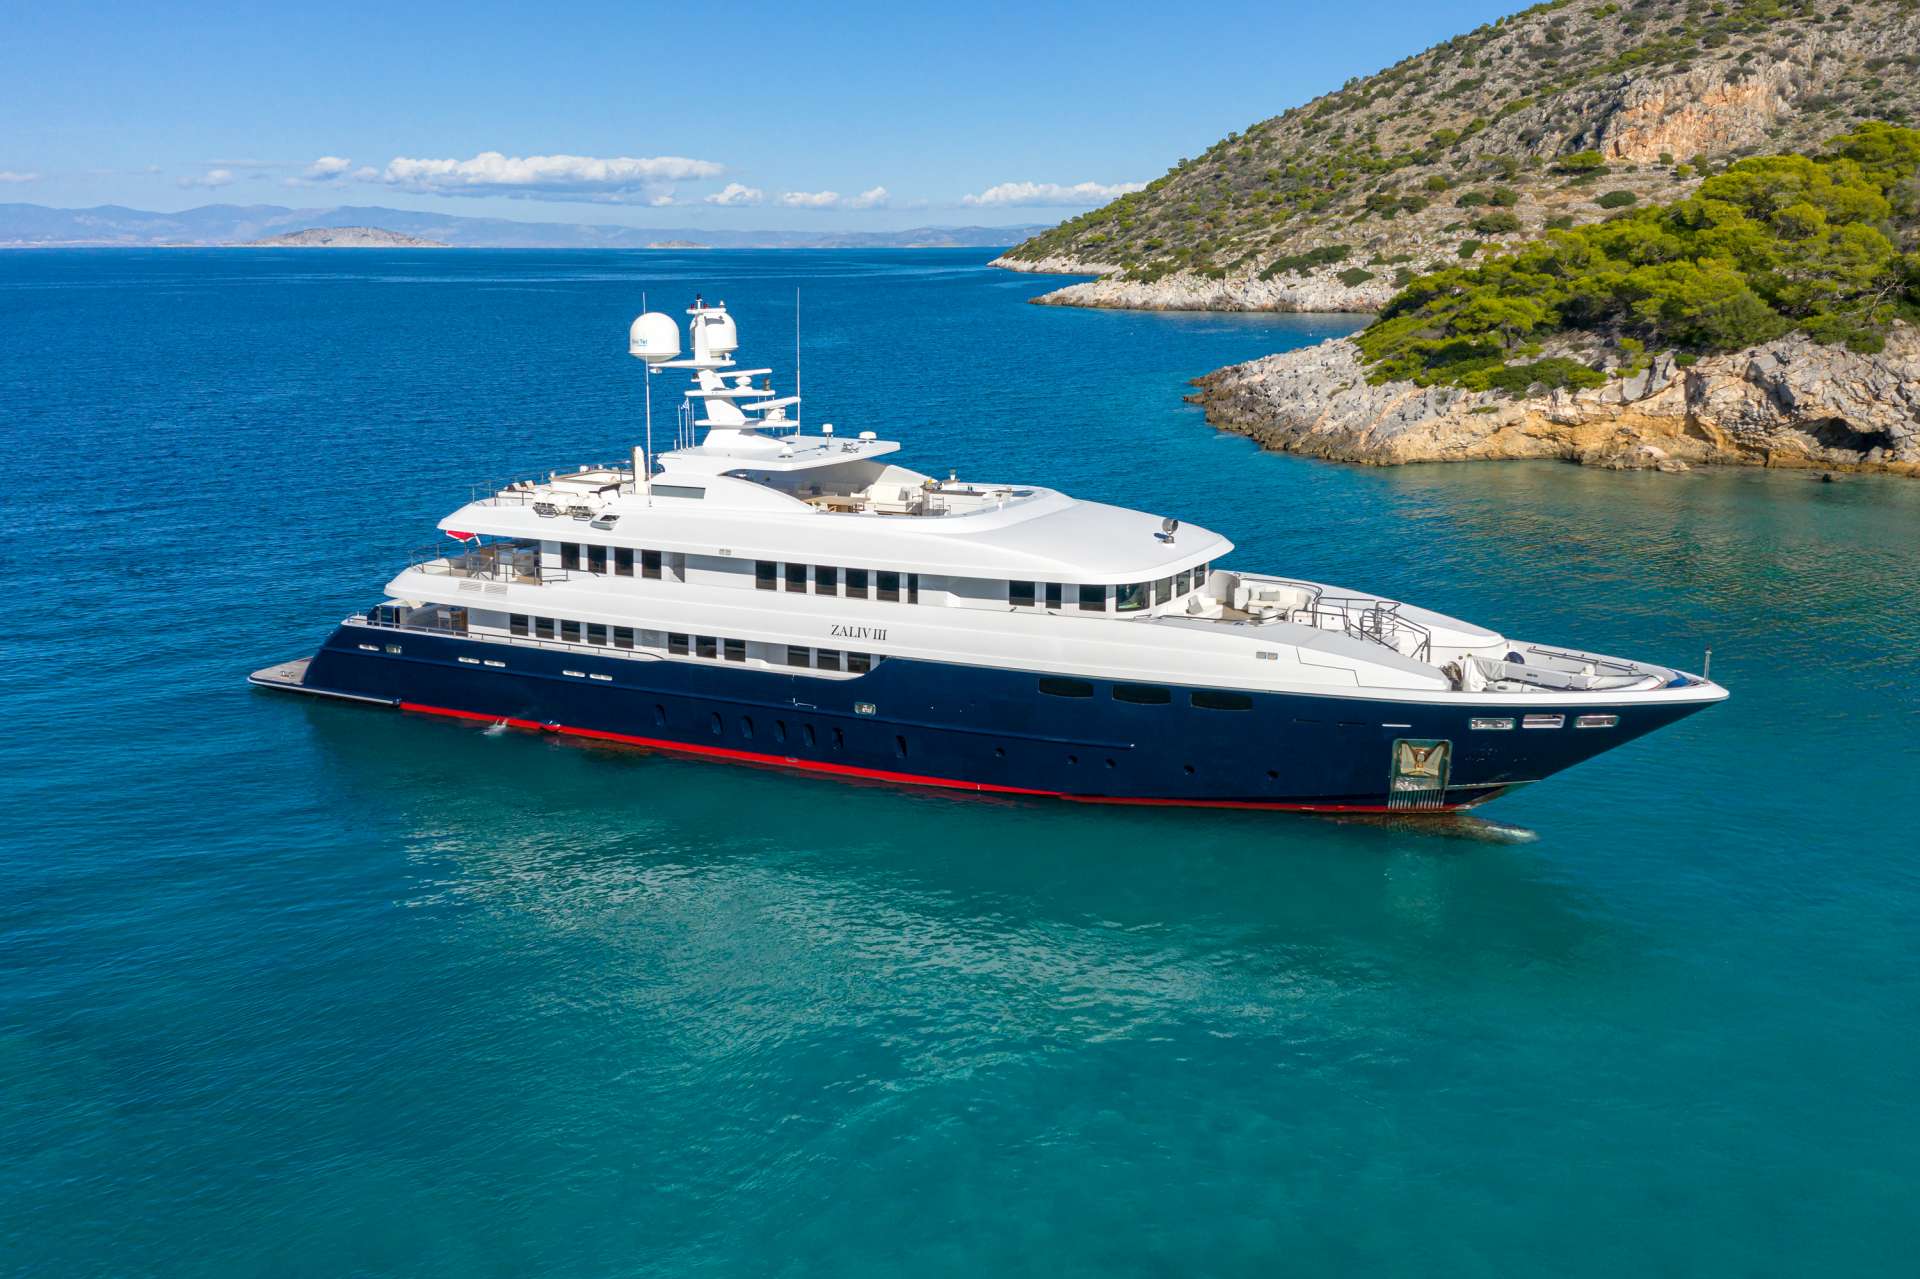 zaliv iii - Motor Boat Charter Montenegro & Boat hire in East Mediterranean 1